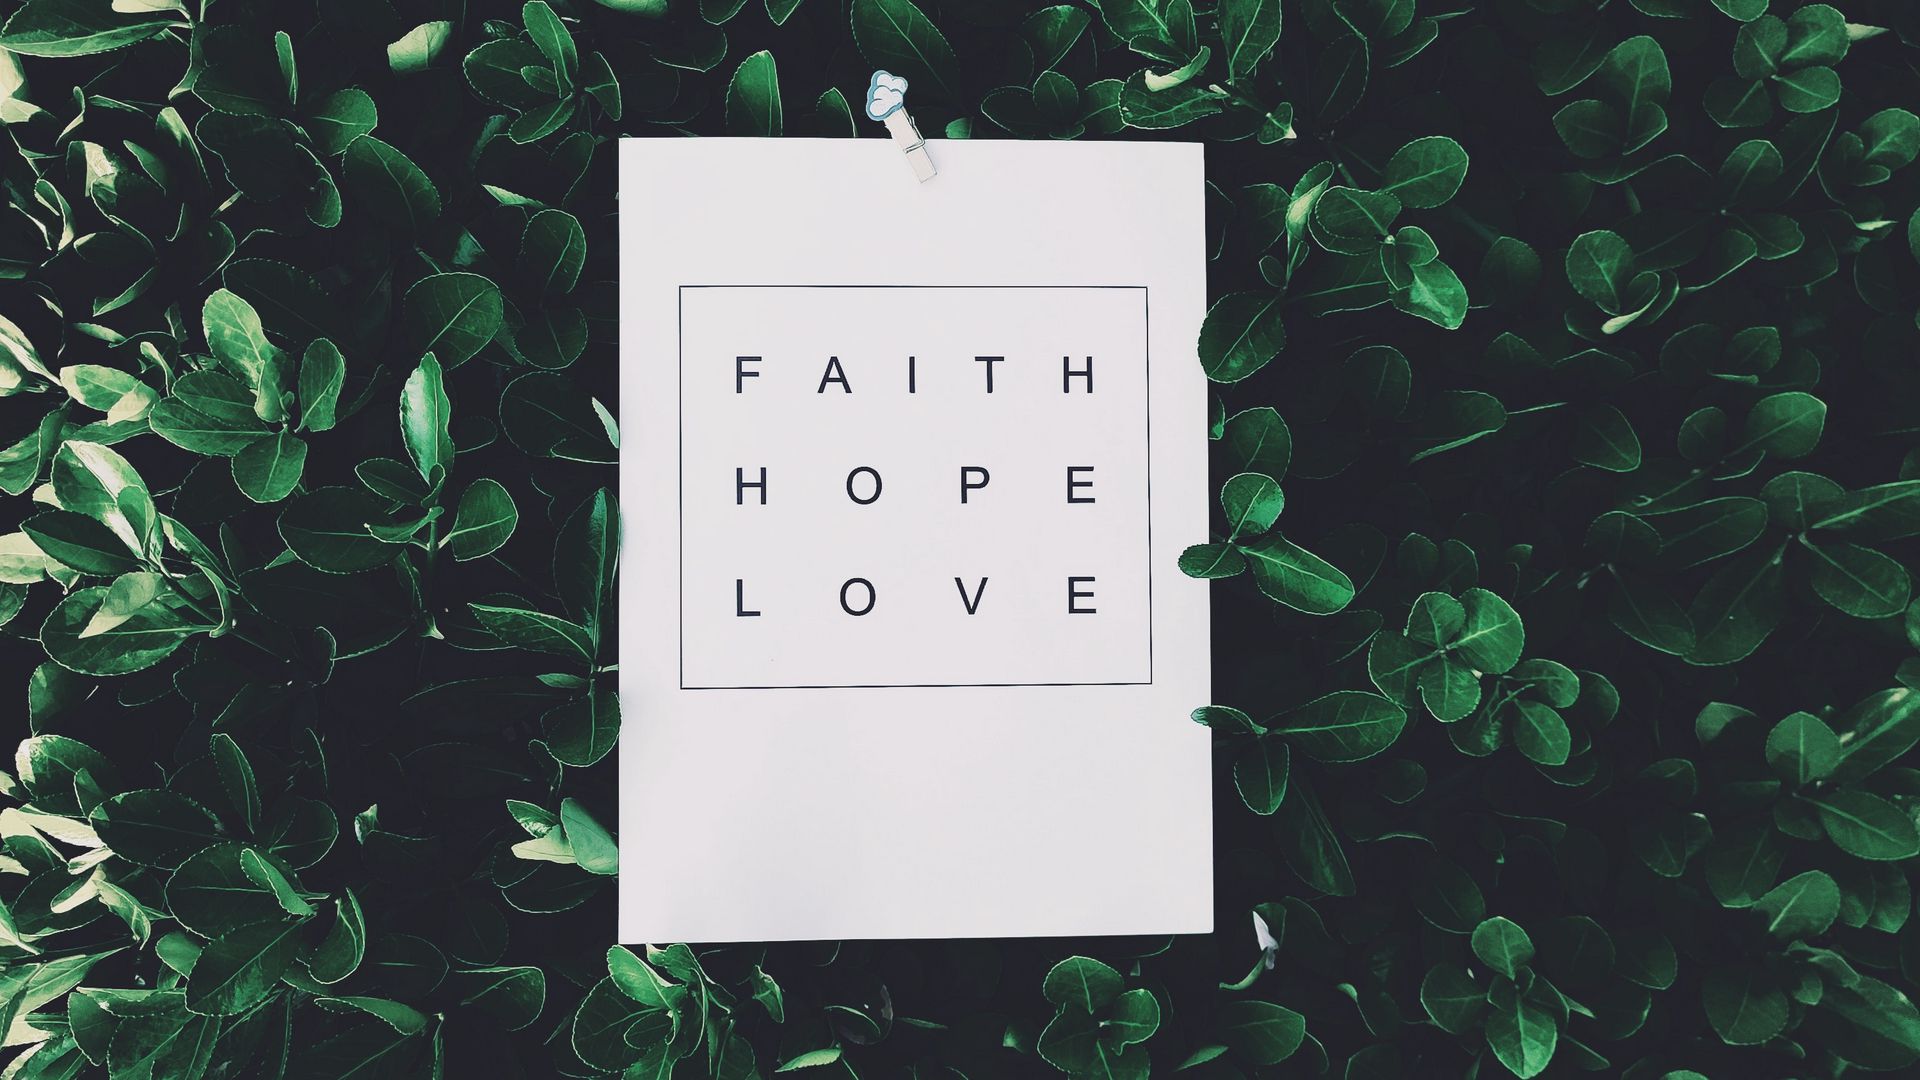 Download wallpaper 1920x1080 faith, hope, love, inscription full hd, hdtv, fhd, 1080p HD background